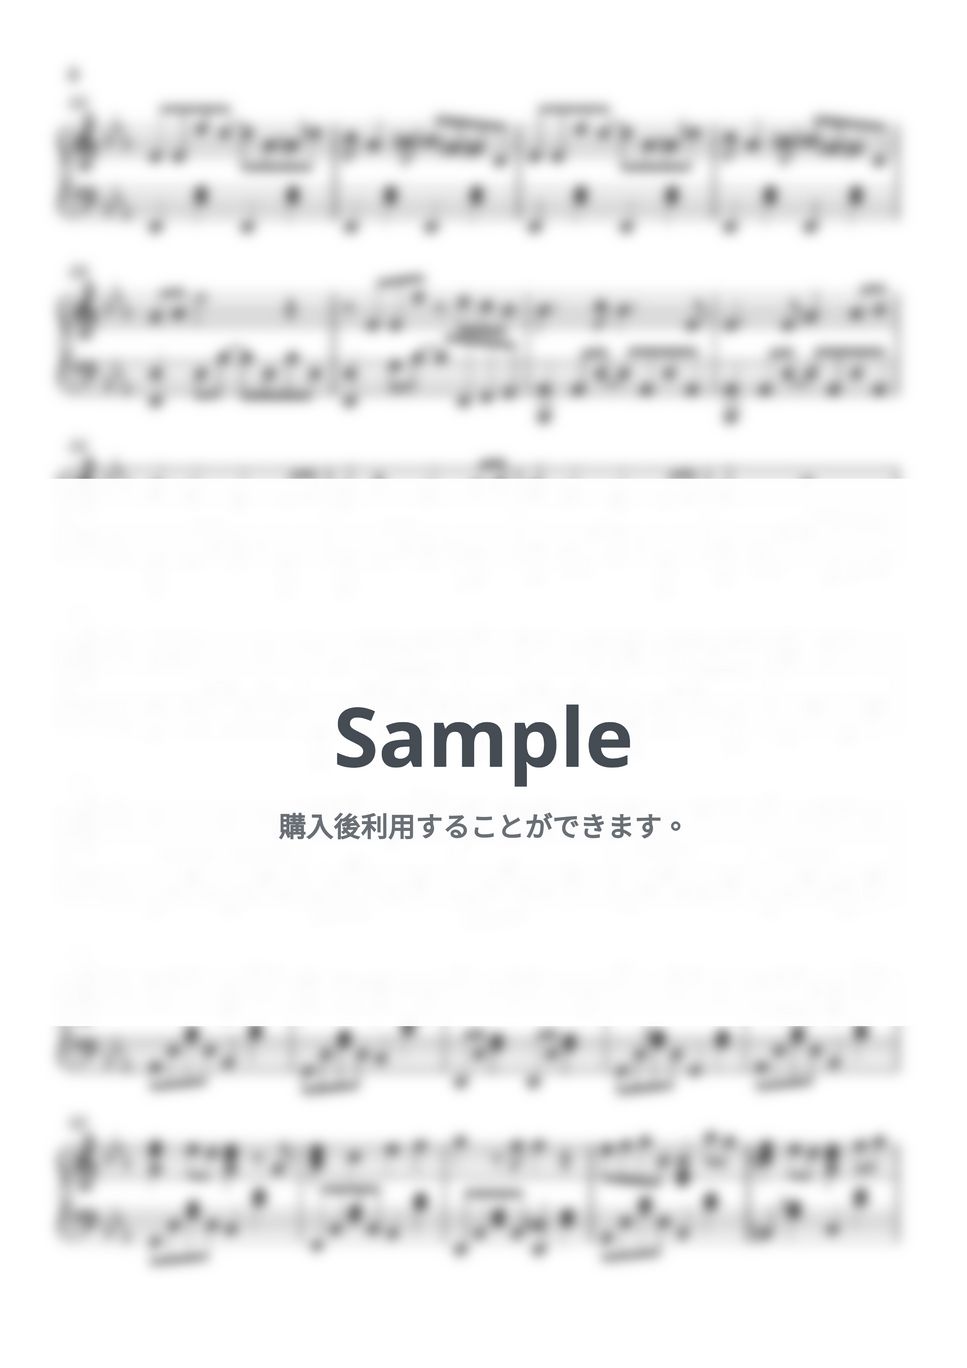 Official髭男dism - ホワイトノイズ (東京リベンジャーズ / ピアノ楽譜 / 中級) by Piano Lovers. jp